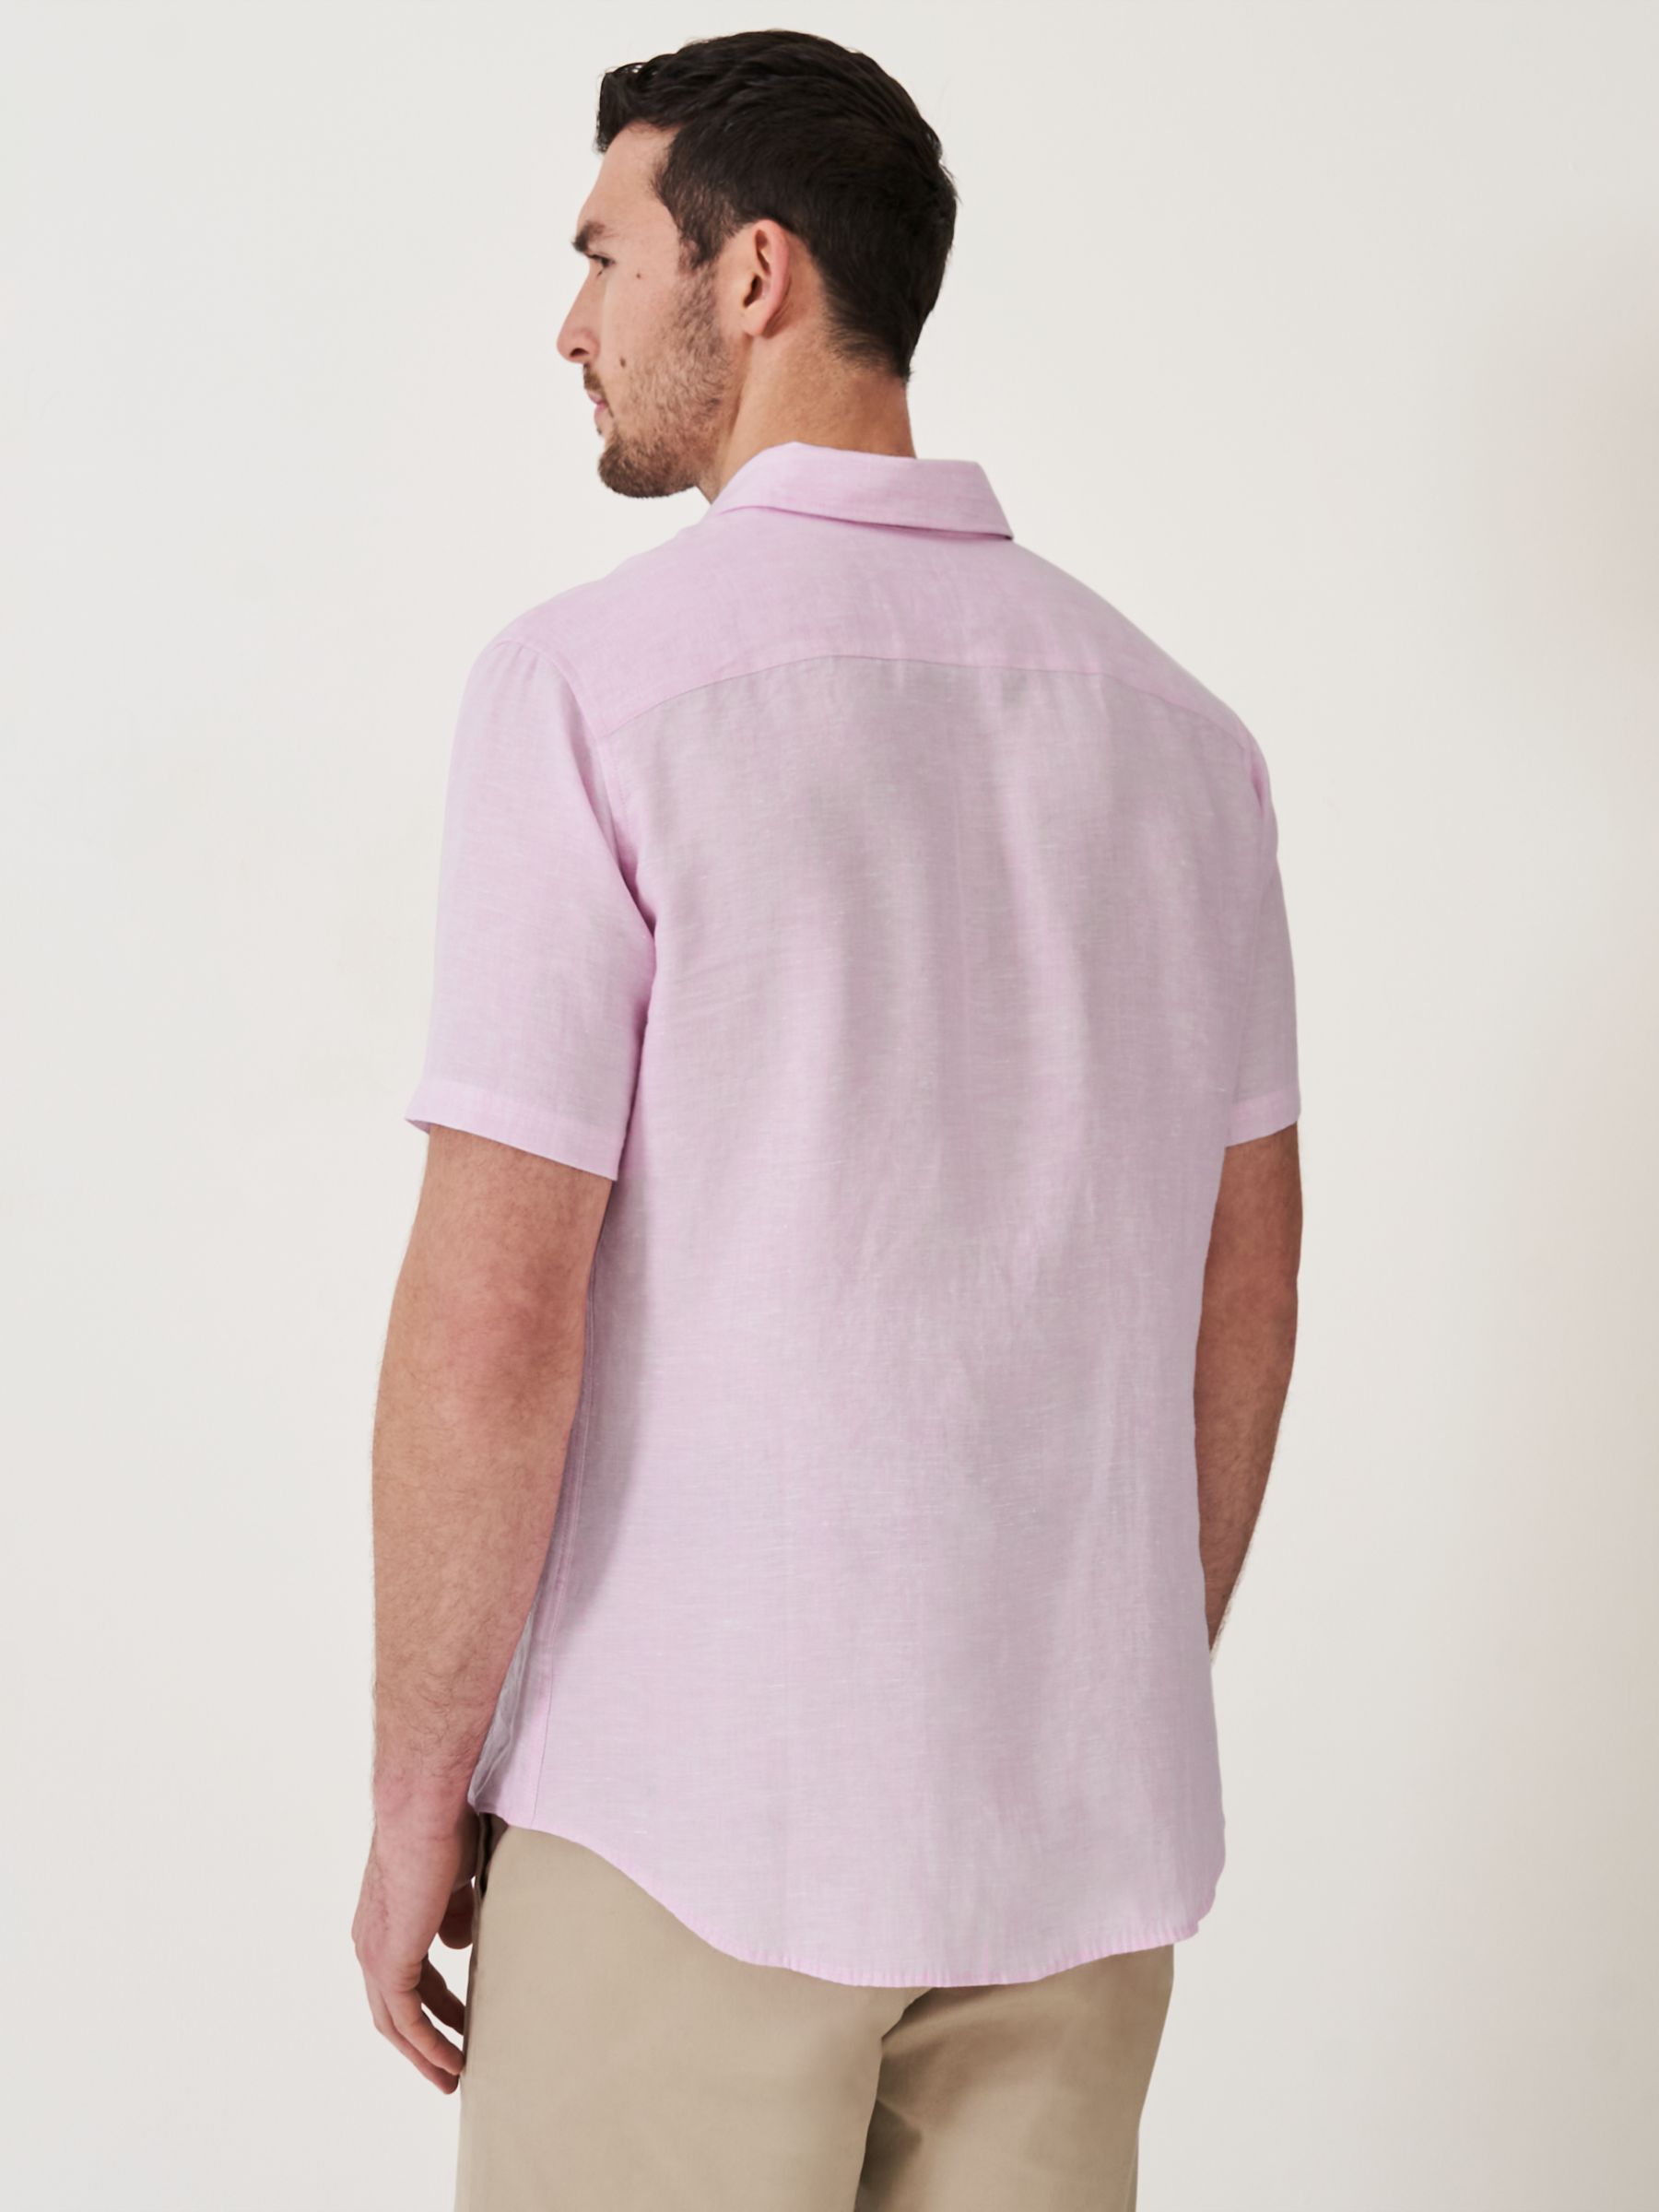 Crew Clothing Linen Short Sleeve Shirt, Pastel Pink, XS